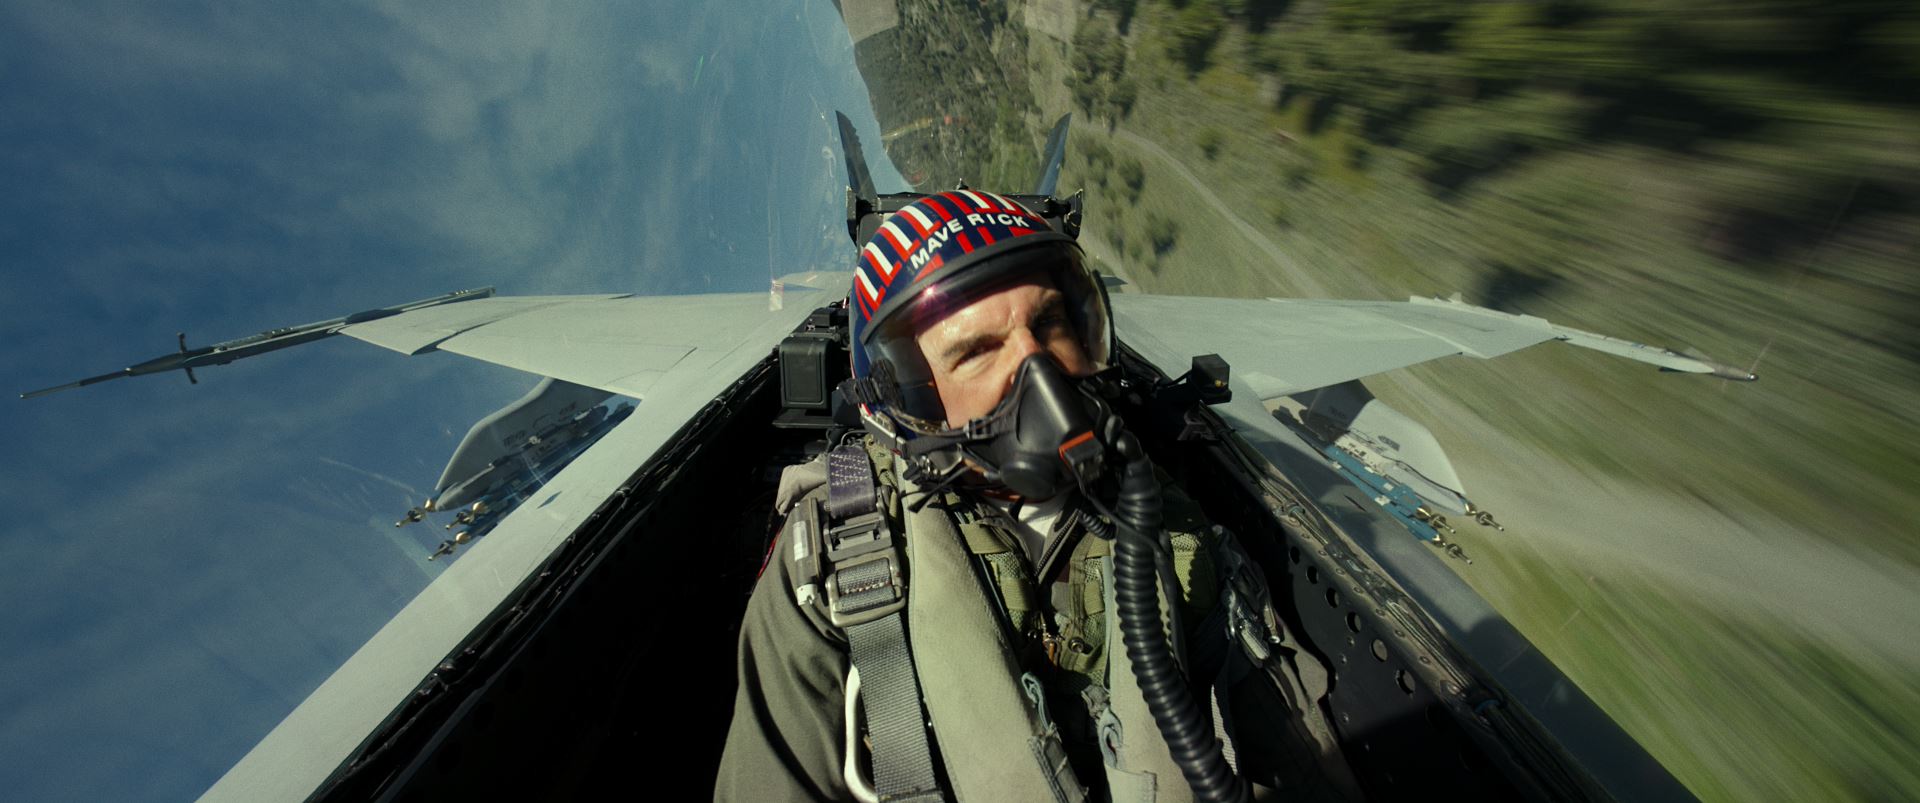 Tom Cruise in Top Gun: Maverick